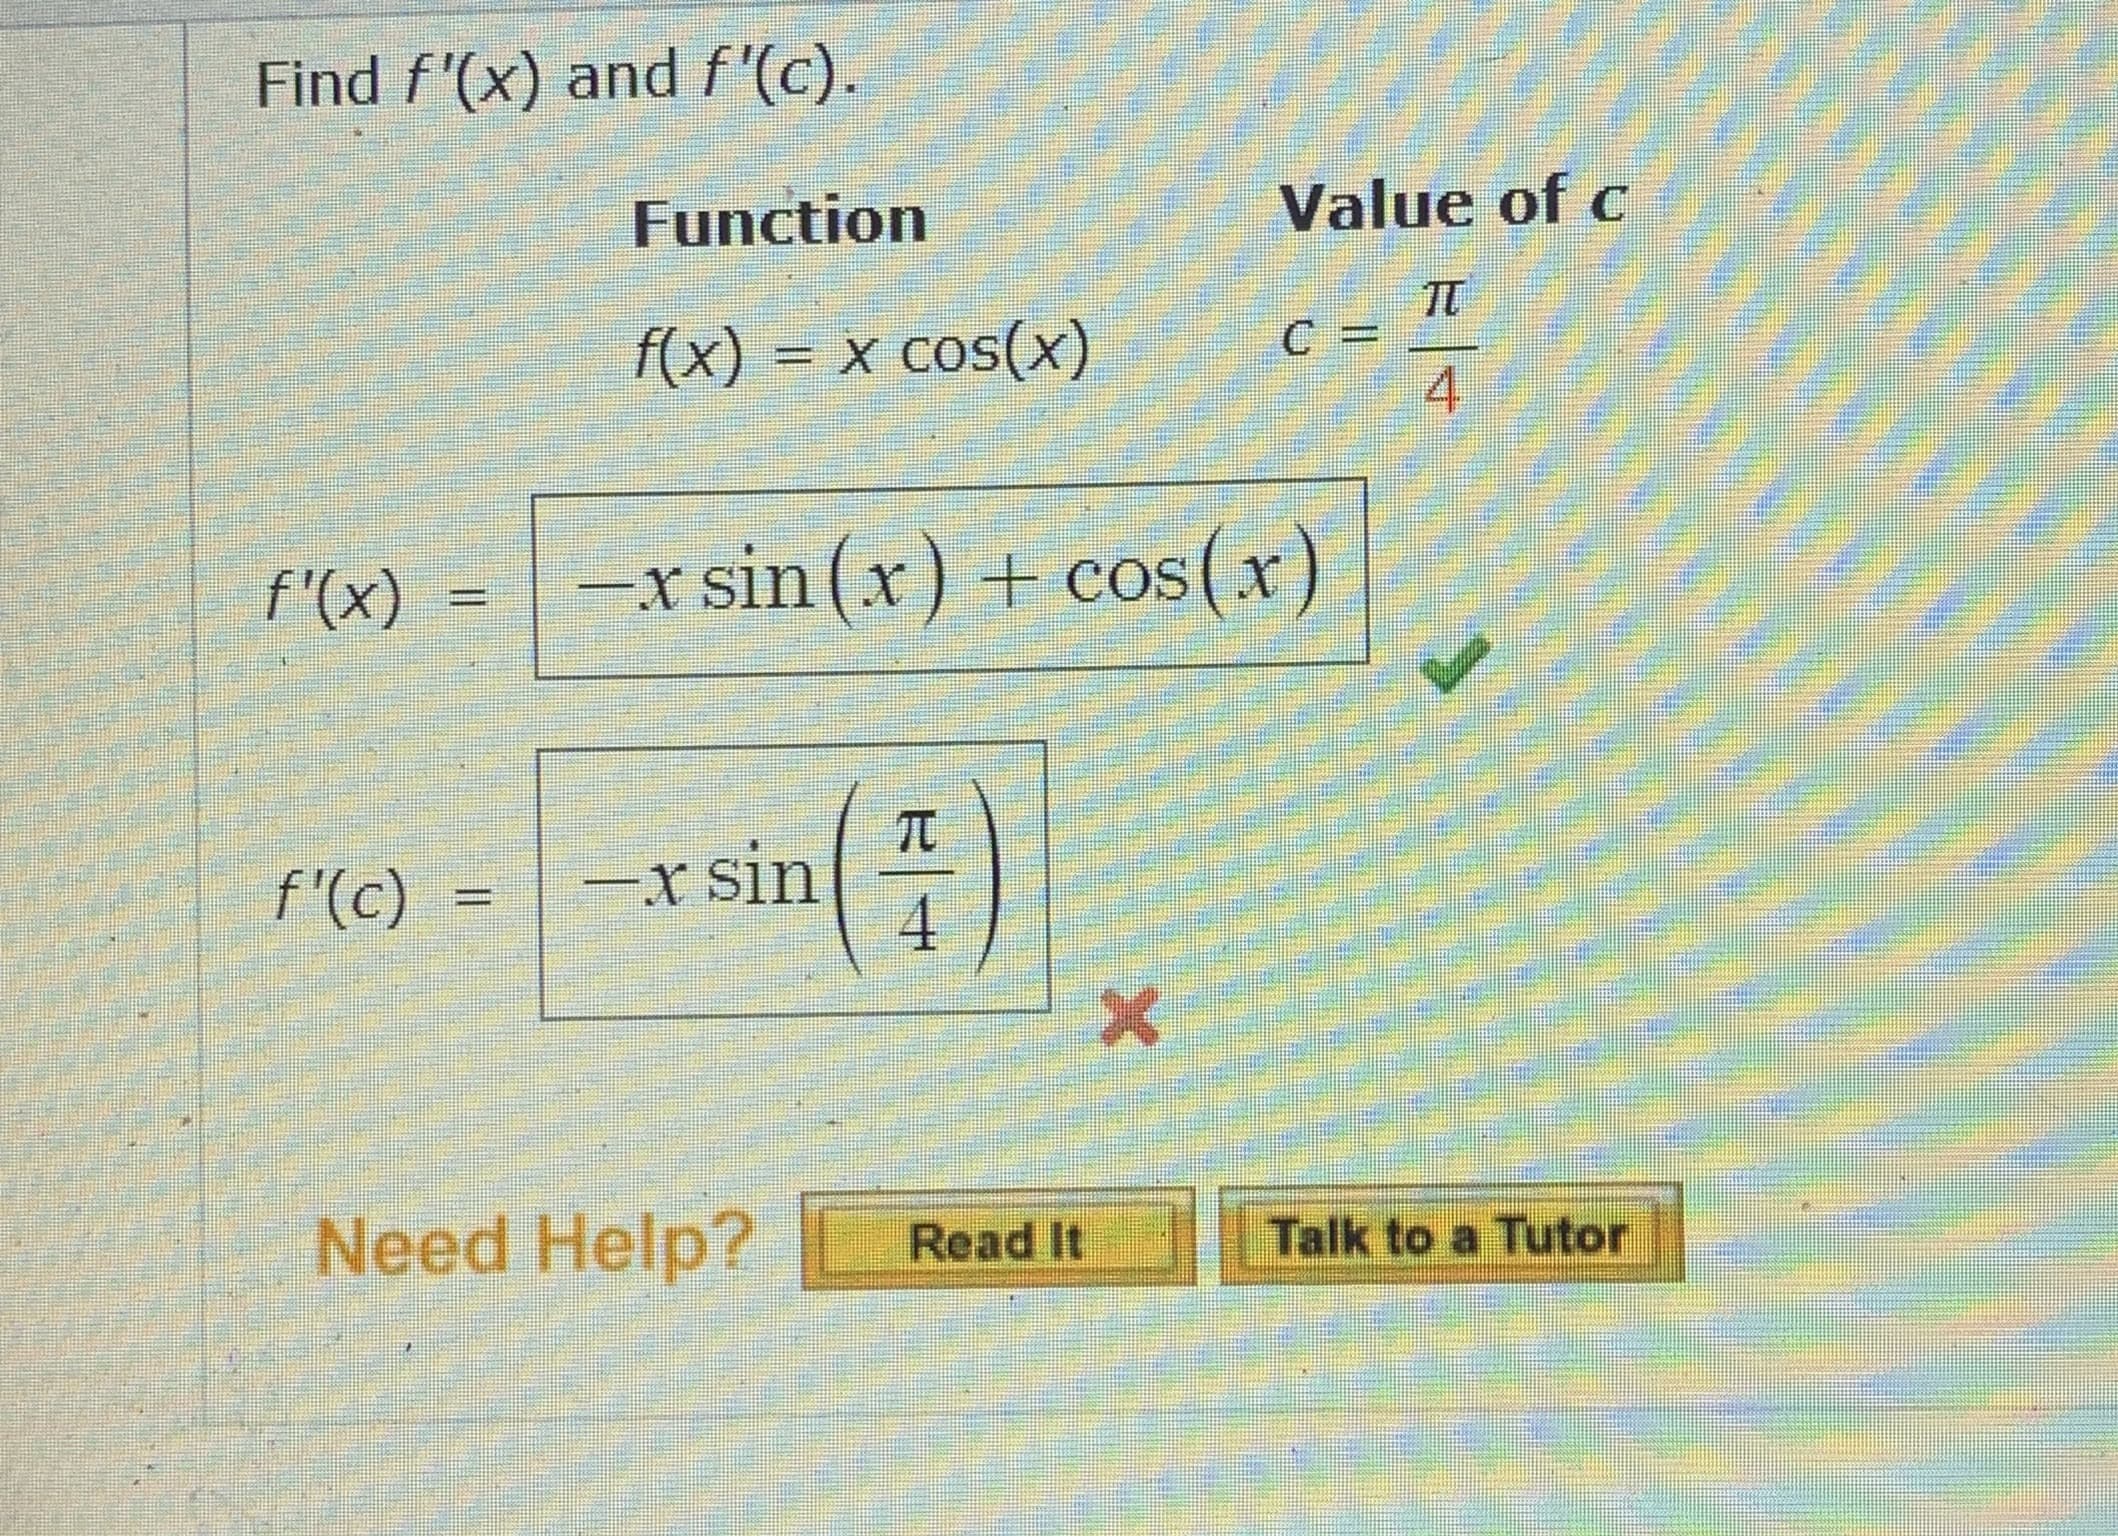 Find f'(x) and f'(c).
Function
Value of c
f(x) = x cos(x)
4.
f'(x)
- s(x)
sin(x) + cos
%3D
f'(c)
-x sin
4.
Need Help?
Read It
Talk to a Tutor
